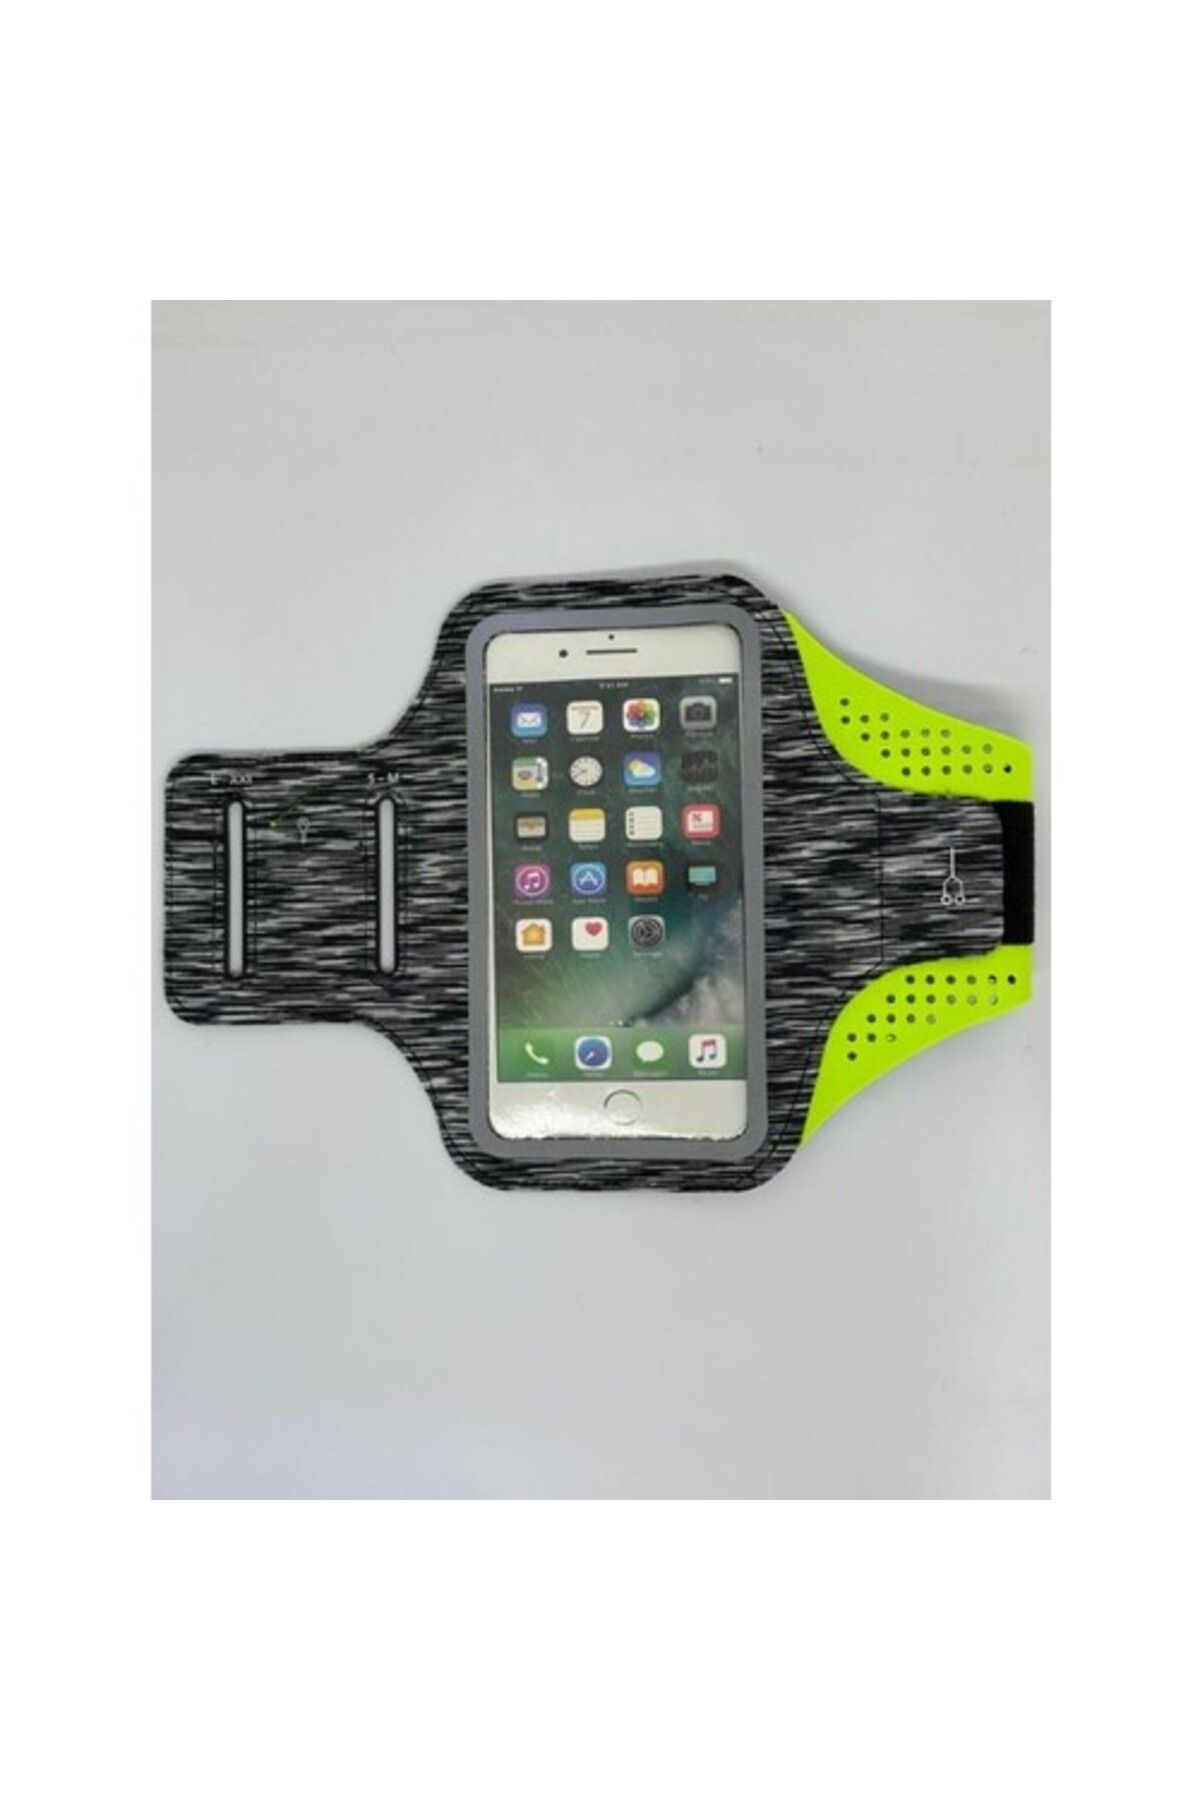 KEEPRO Telefon kol bandı Sporcu telefon kılıfı kol için telefon kılıf 16 cm 8 cm telefonlara uygundur